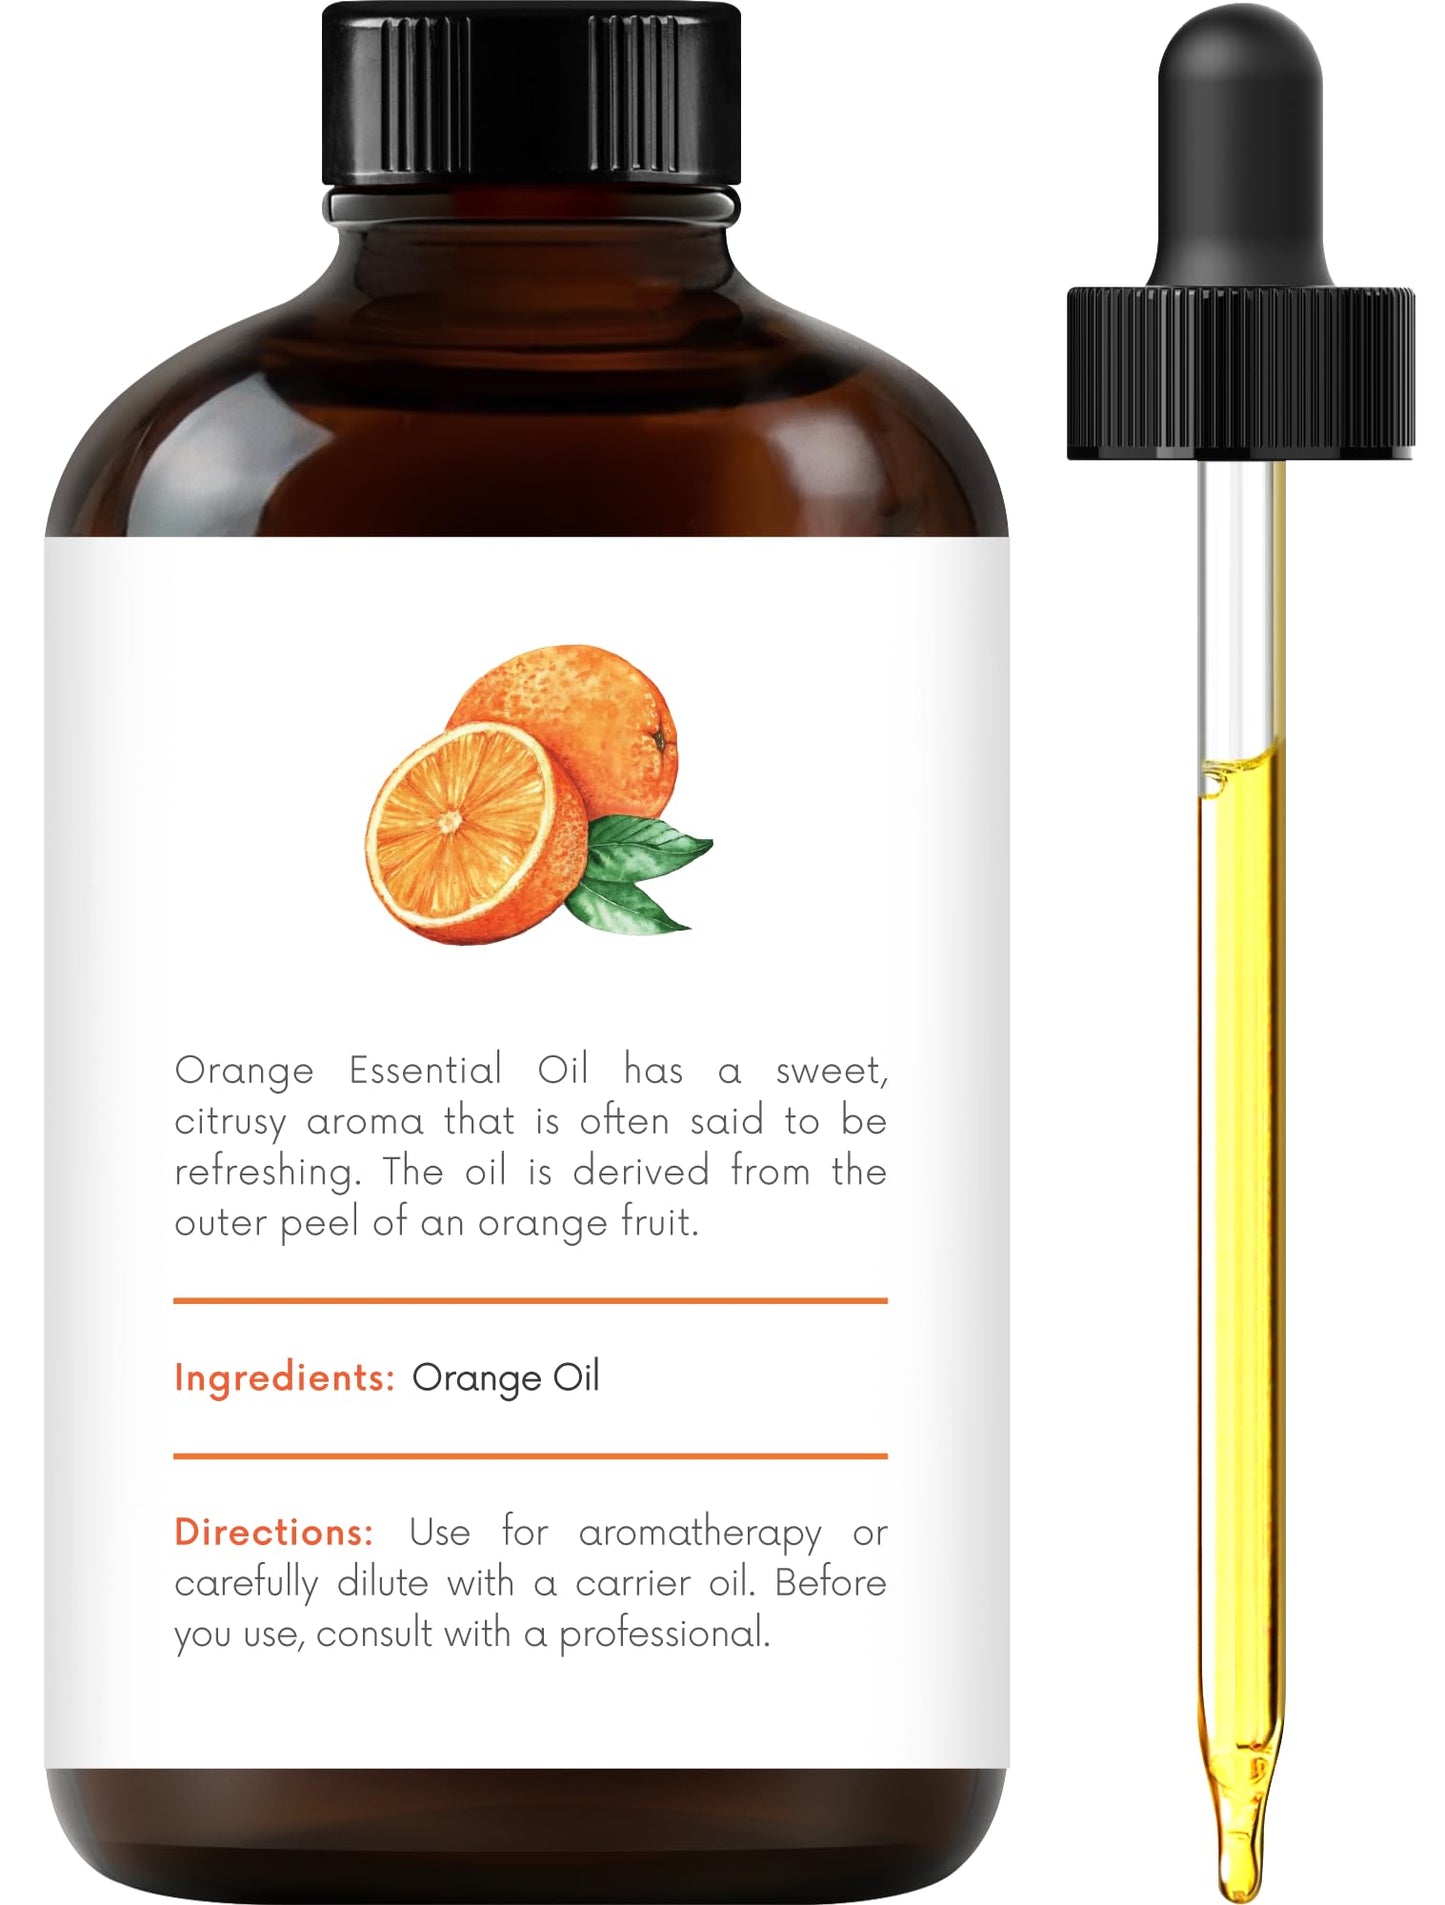 Handcraft Blends Orange Essential Oil